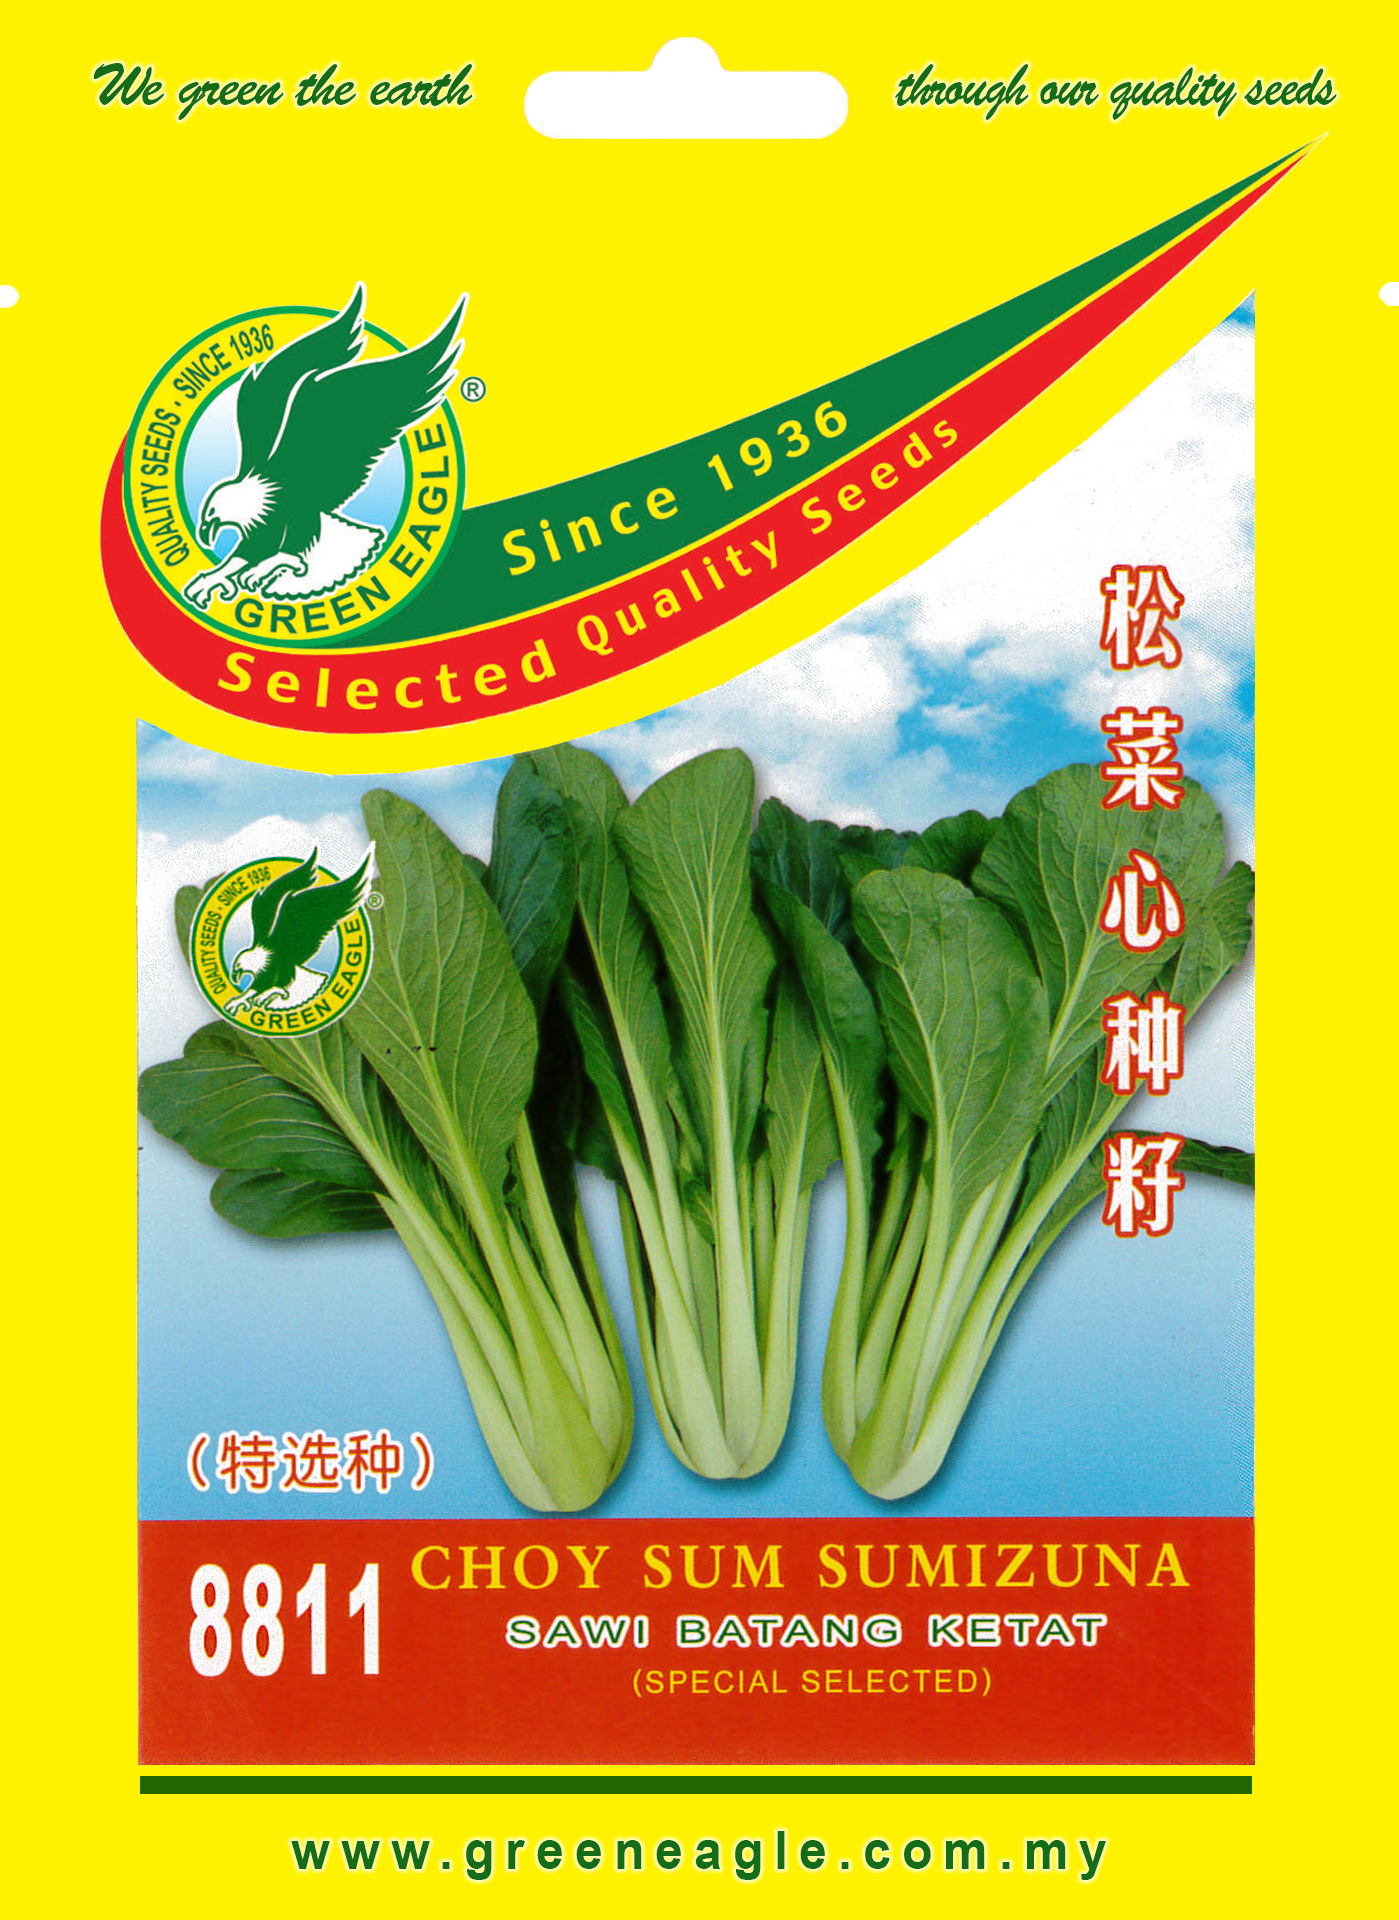 8811 Choy Sum Sumizuna